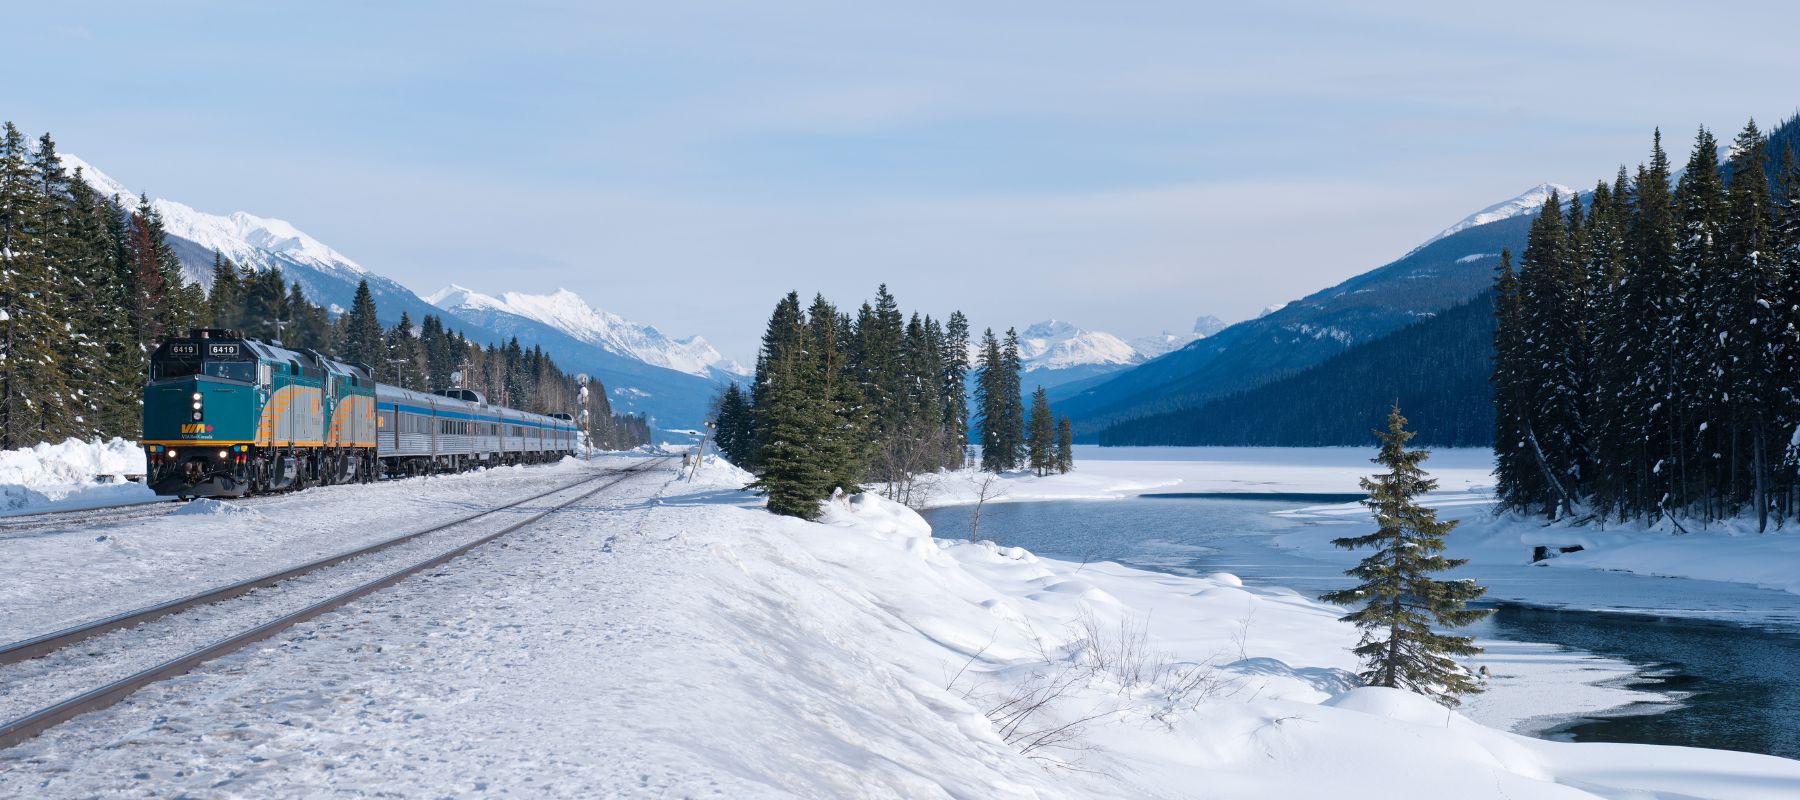 Best Canadian Snow Train Trips